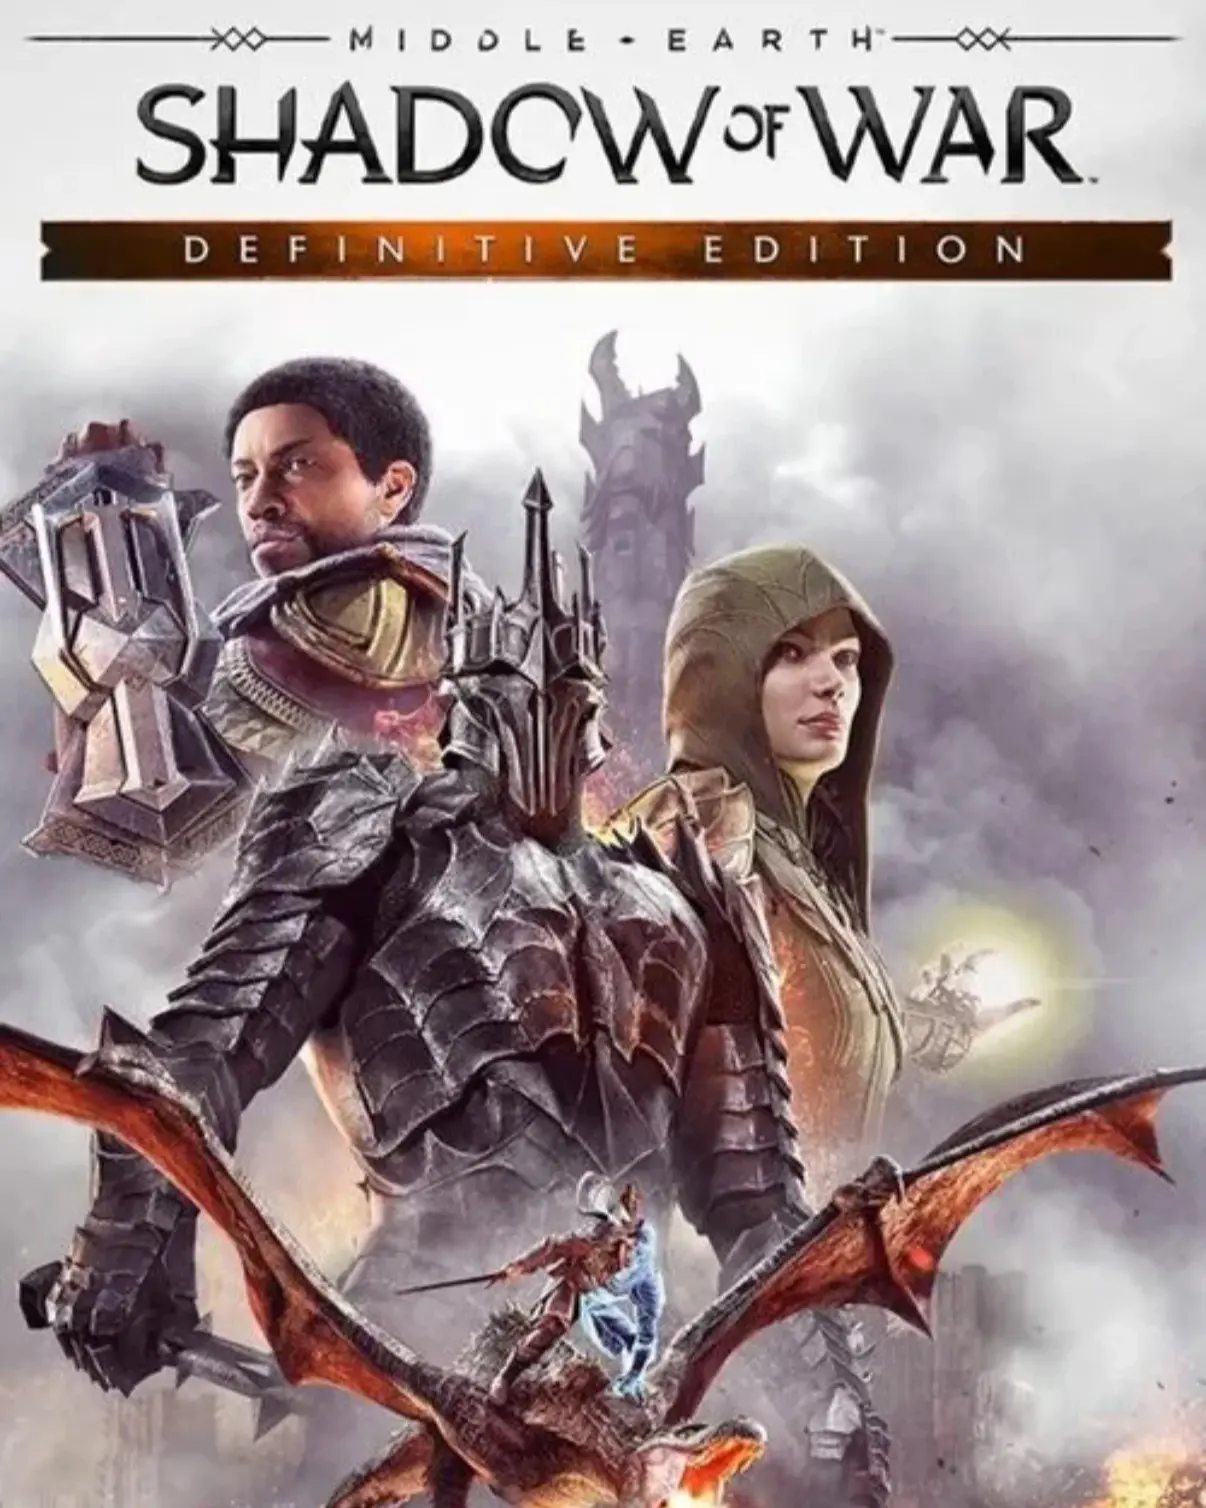 Middle-earth: Shadow of War (AR) (Xbox One / Xbox Series X|S) - Xbox Live - Digital Code